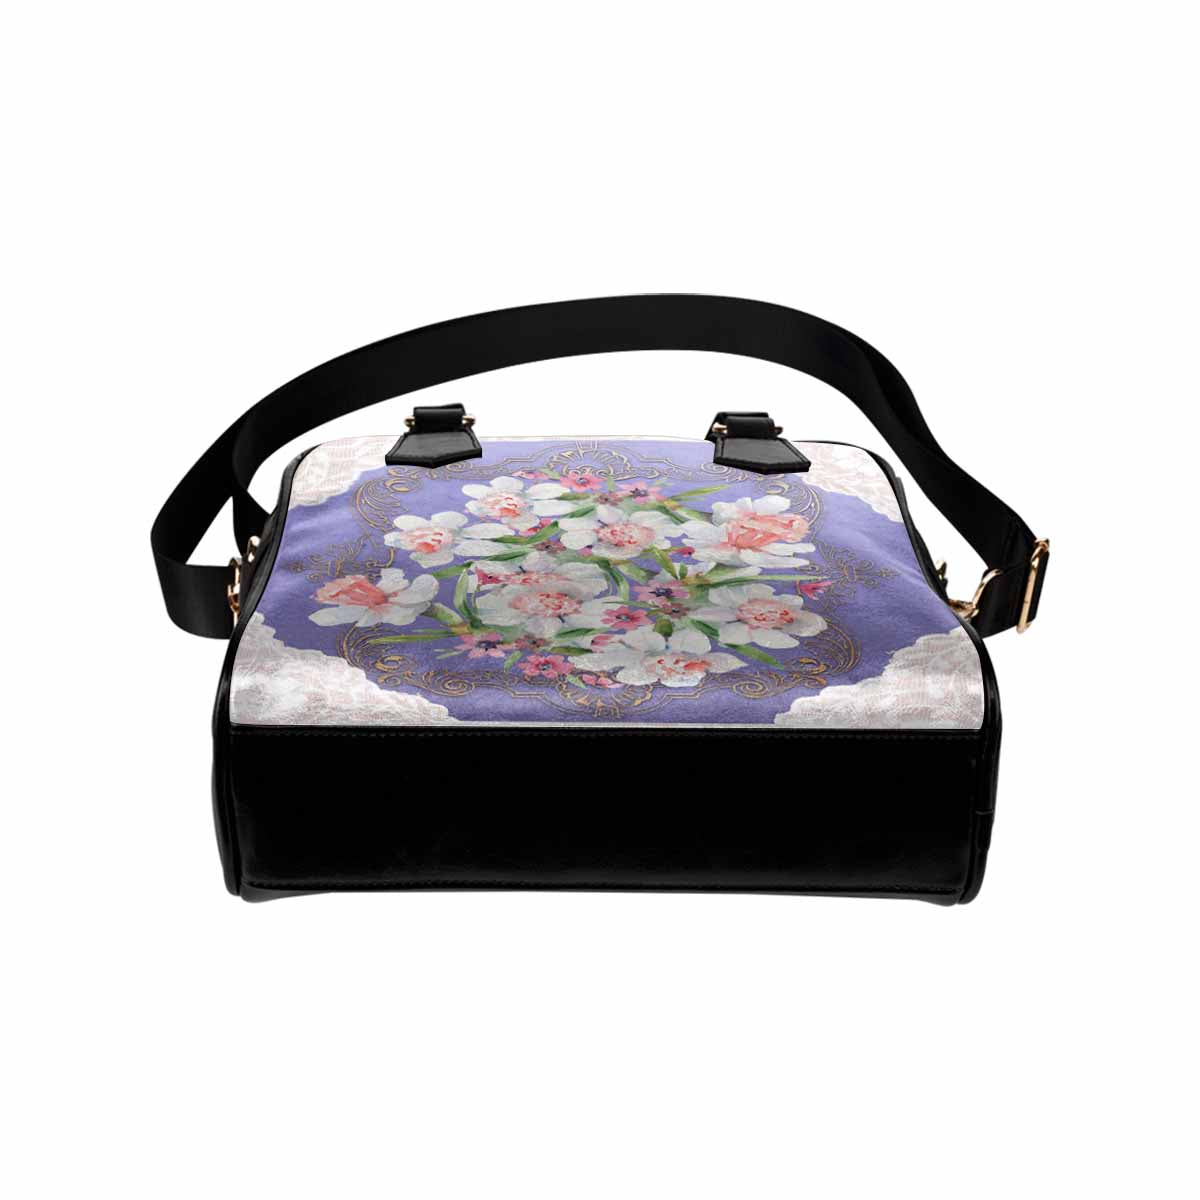 Victorian lace print, cute handbag, Mod 19163453, design 47